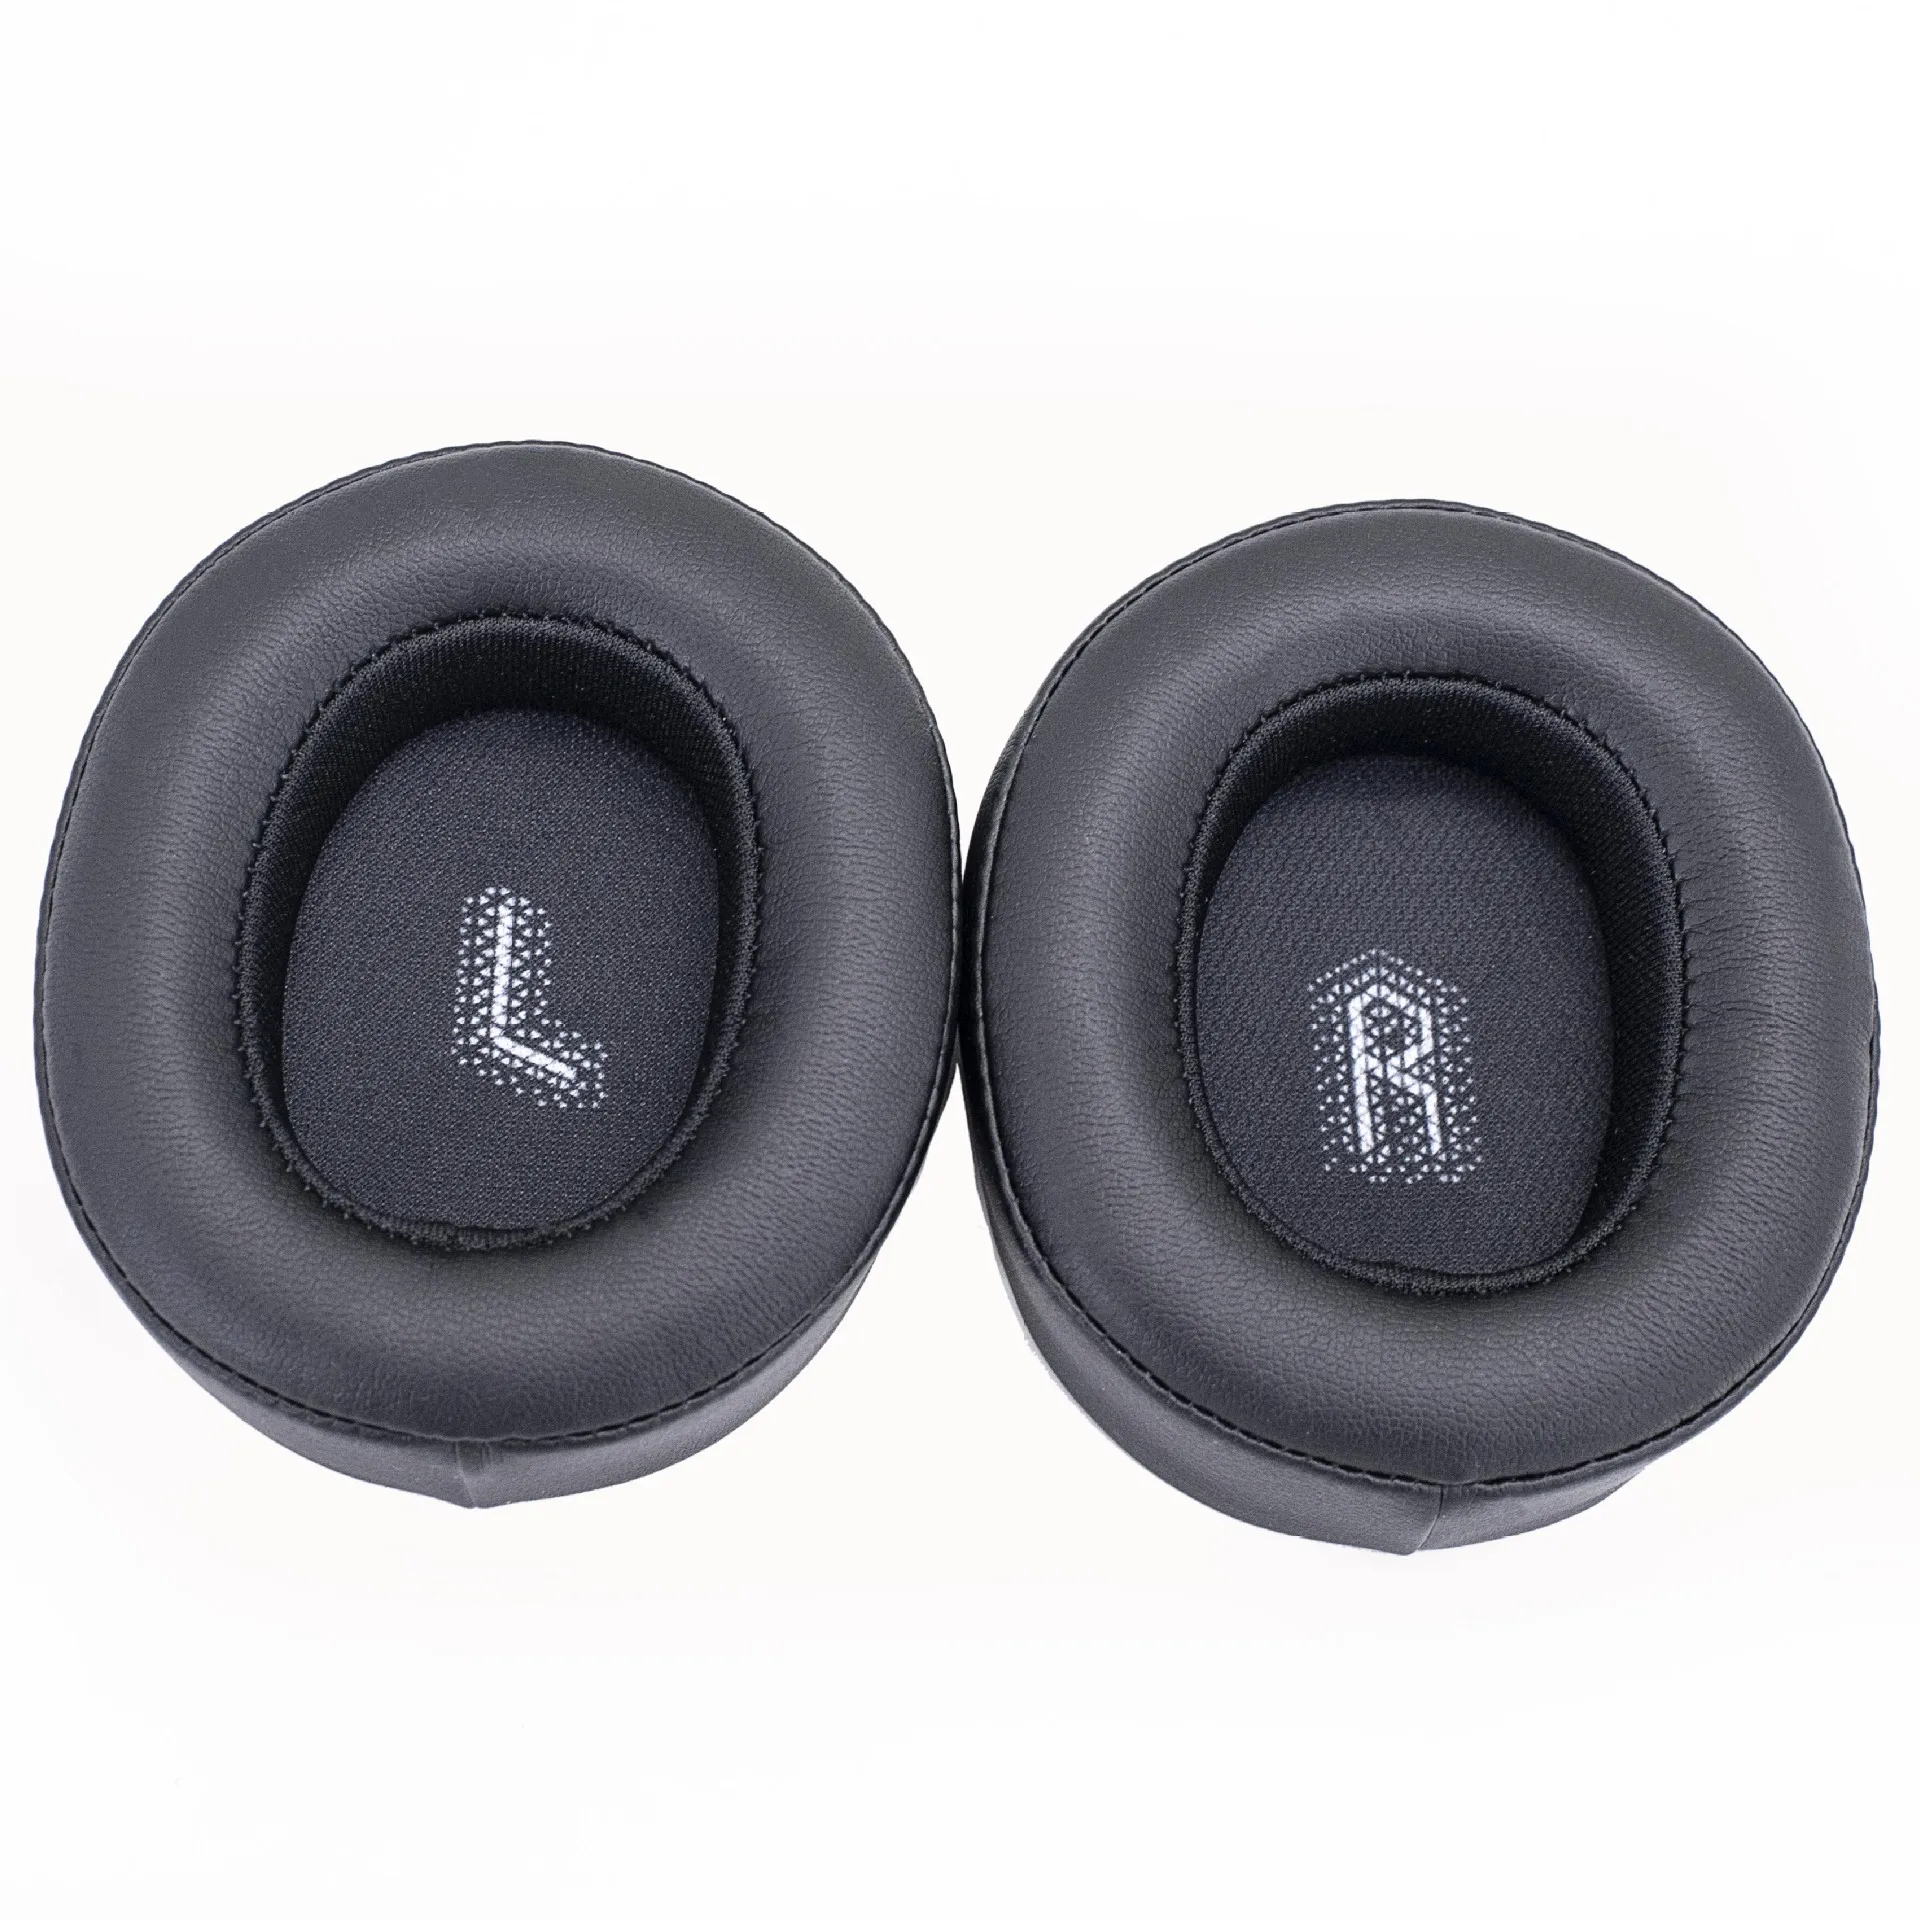 Earpads Foam for jbl E55 BT  Ear Pads Pillow Ear Cushions Cover Cups Earmuffs Replacement for J-B-L E55BT Headset wireless gaming headphones